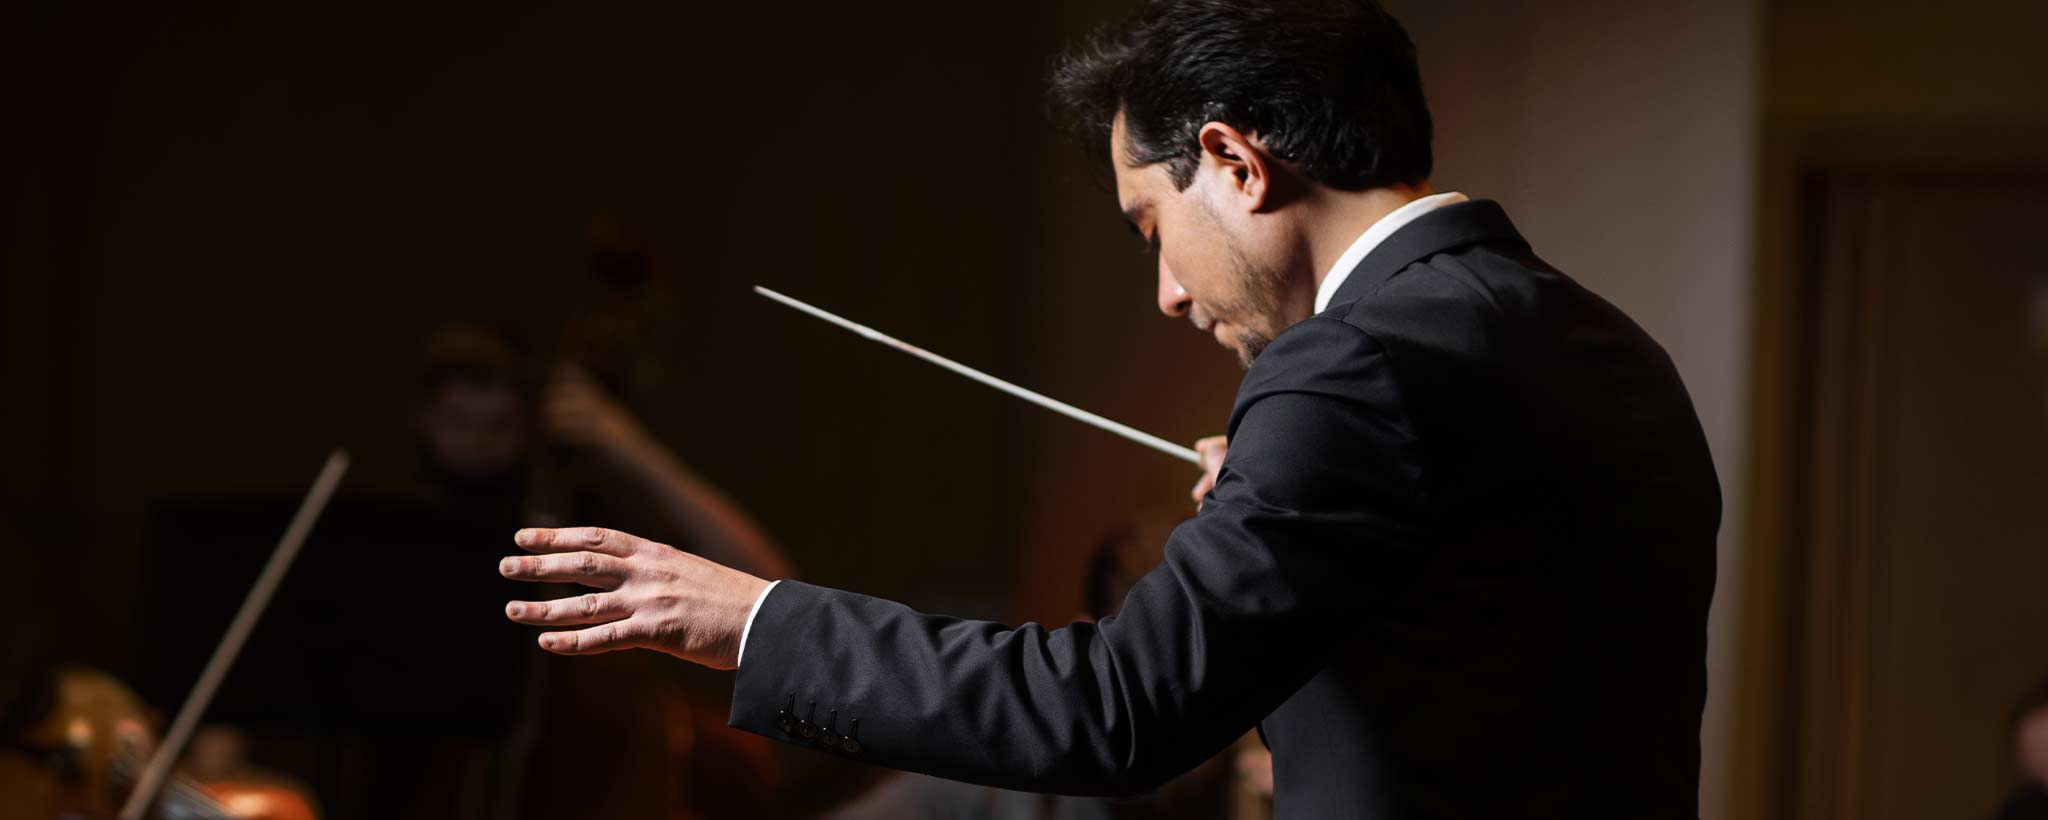 'Male orchestra conductor'